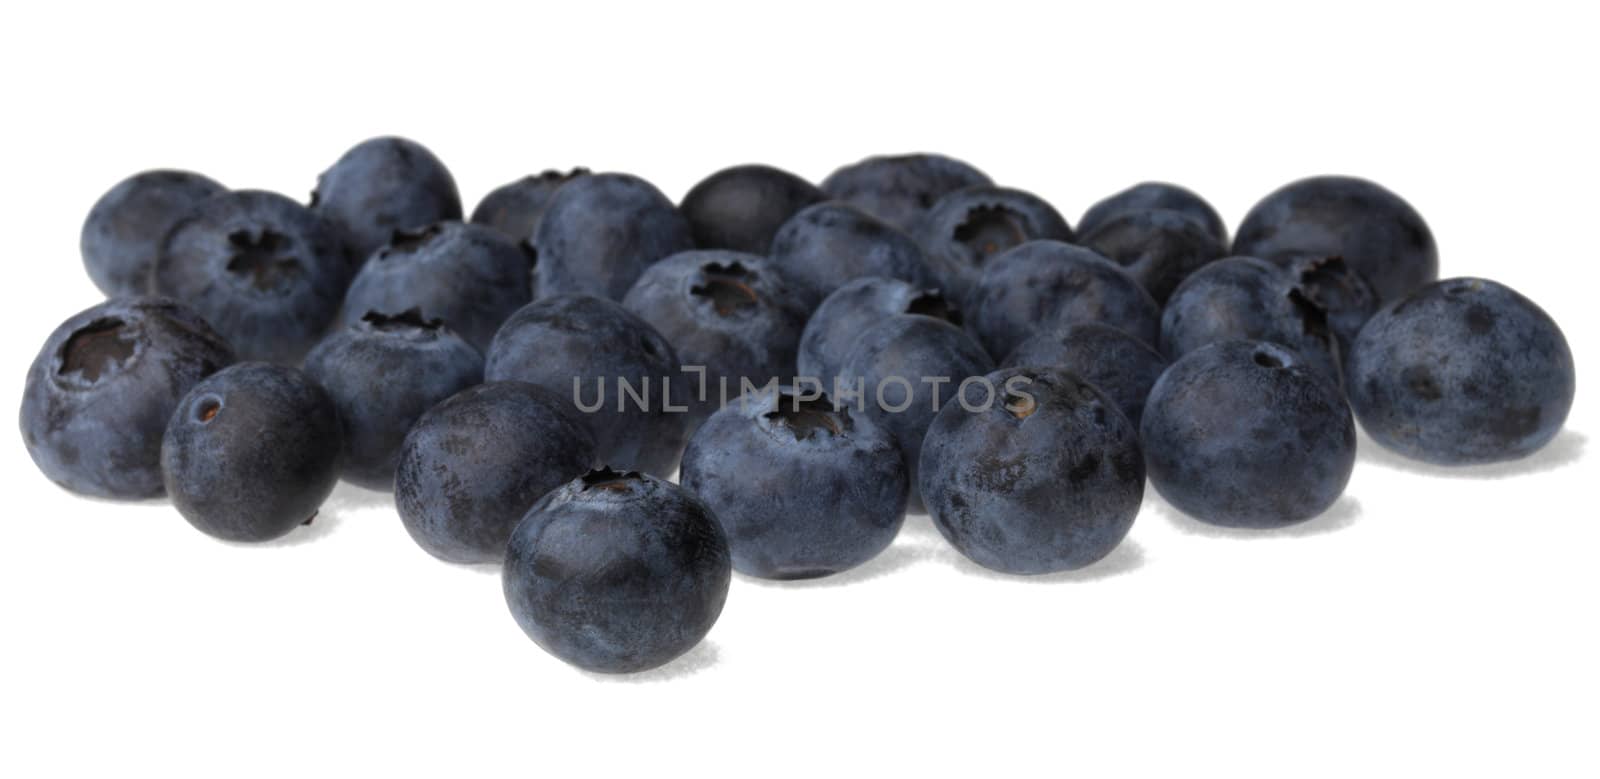 Blueberries by RazvanPhotography